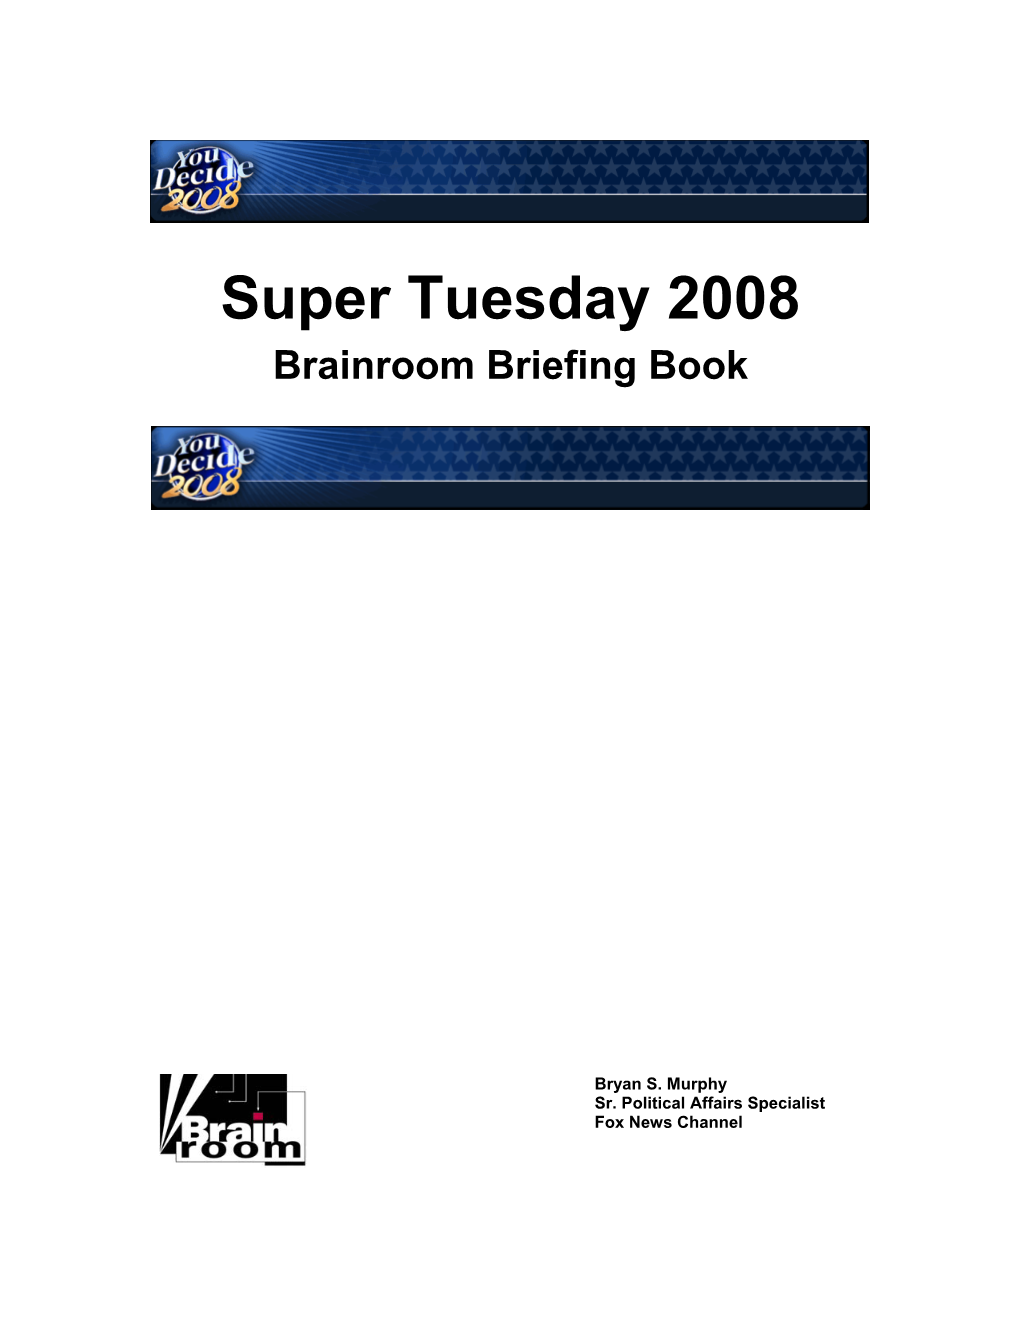 Super Tuesday 2008 Brainroom Briefing Book